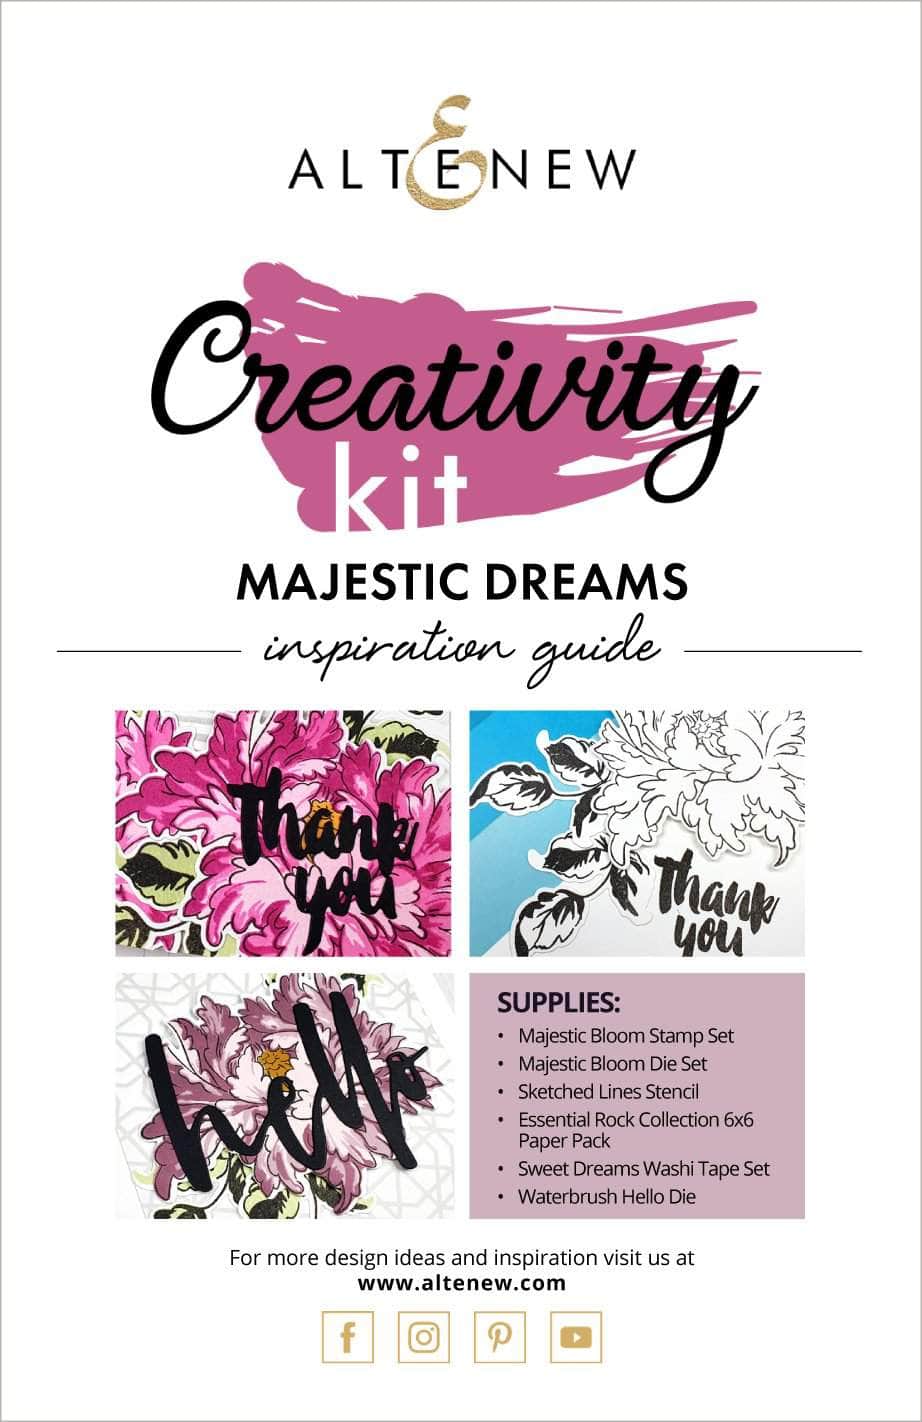 Printed Media Majestic Dreams Creativity Kit Inspiration Guide